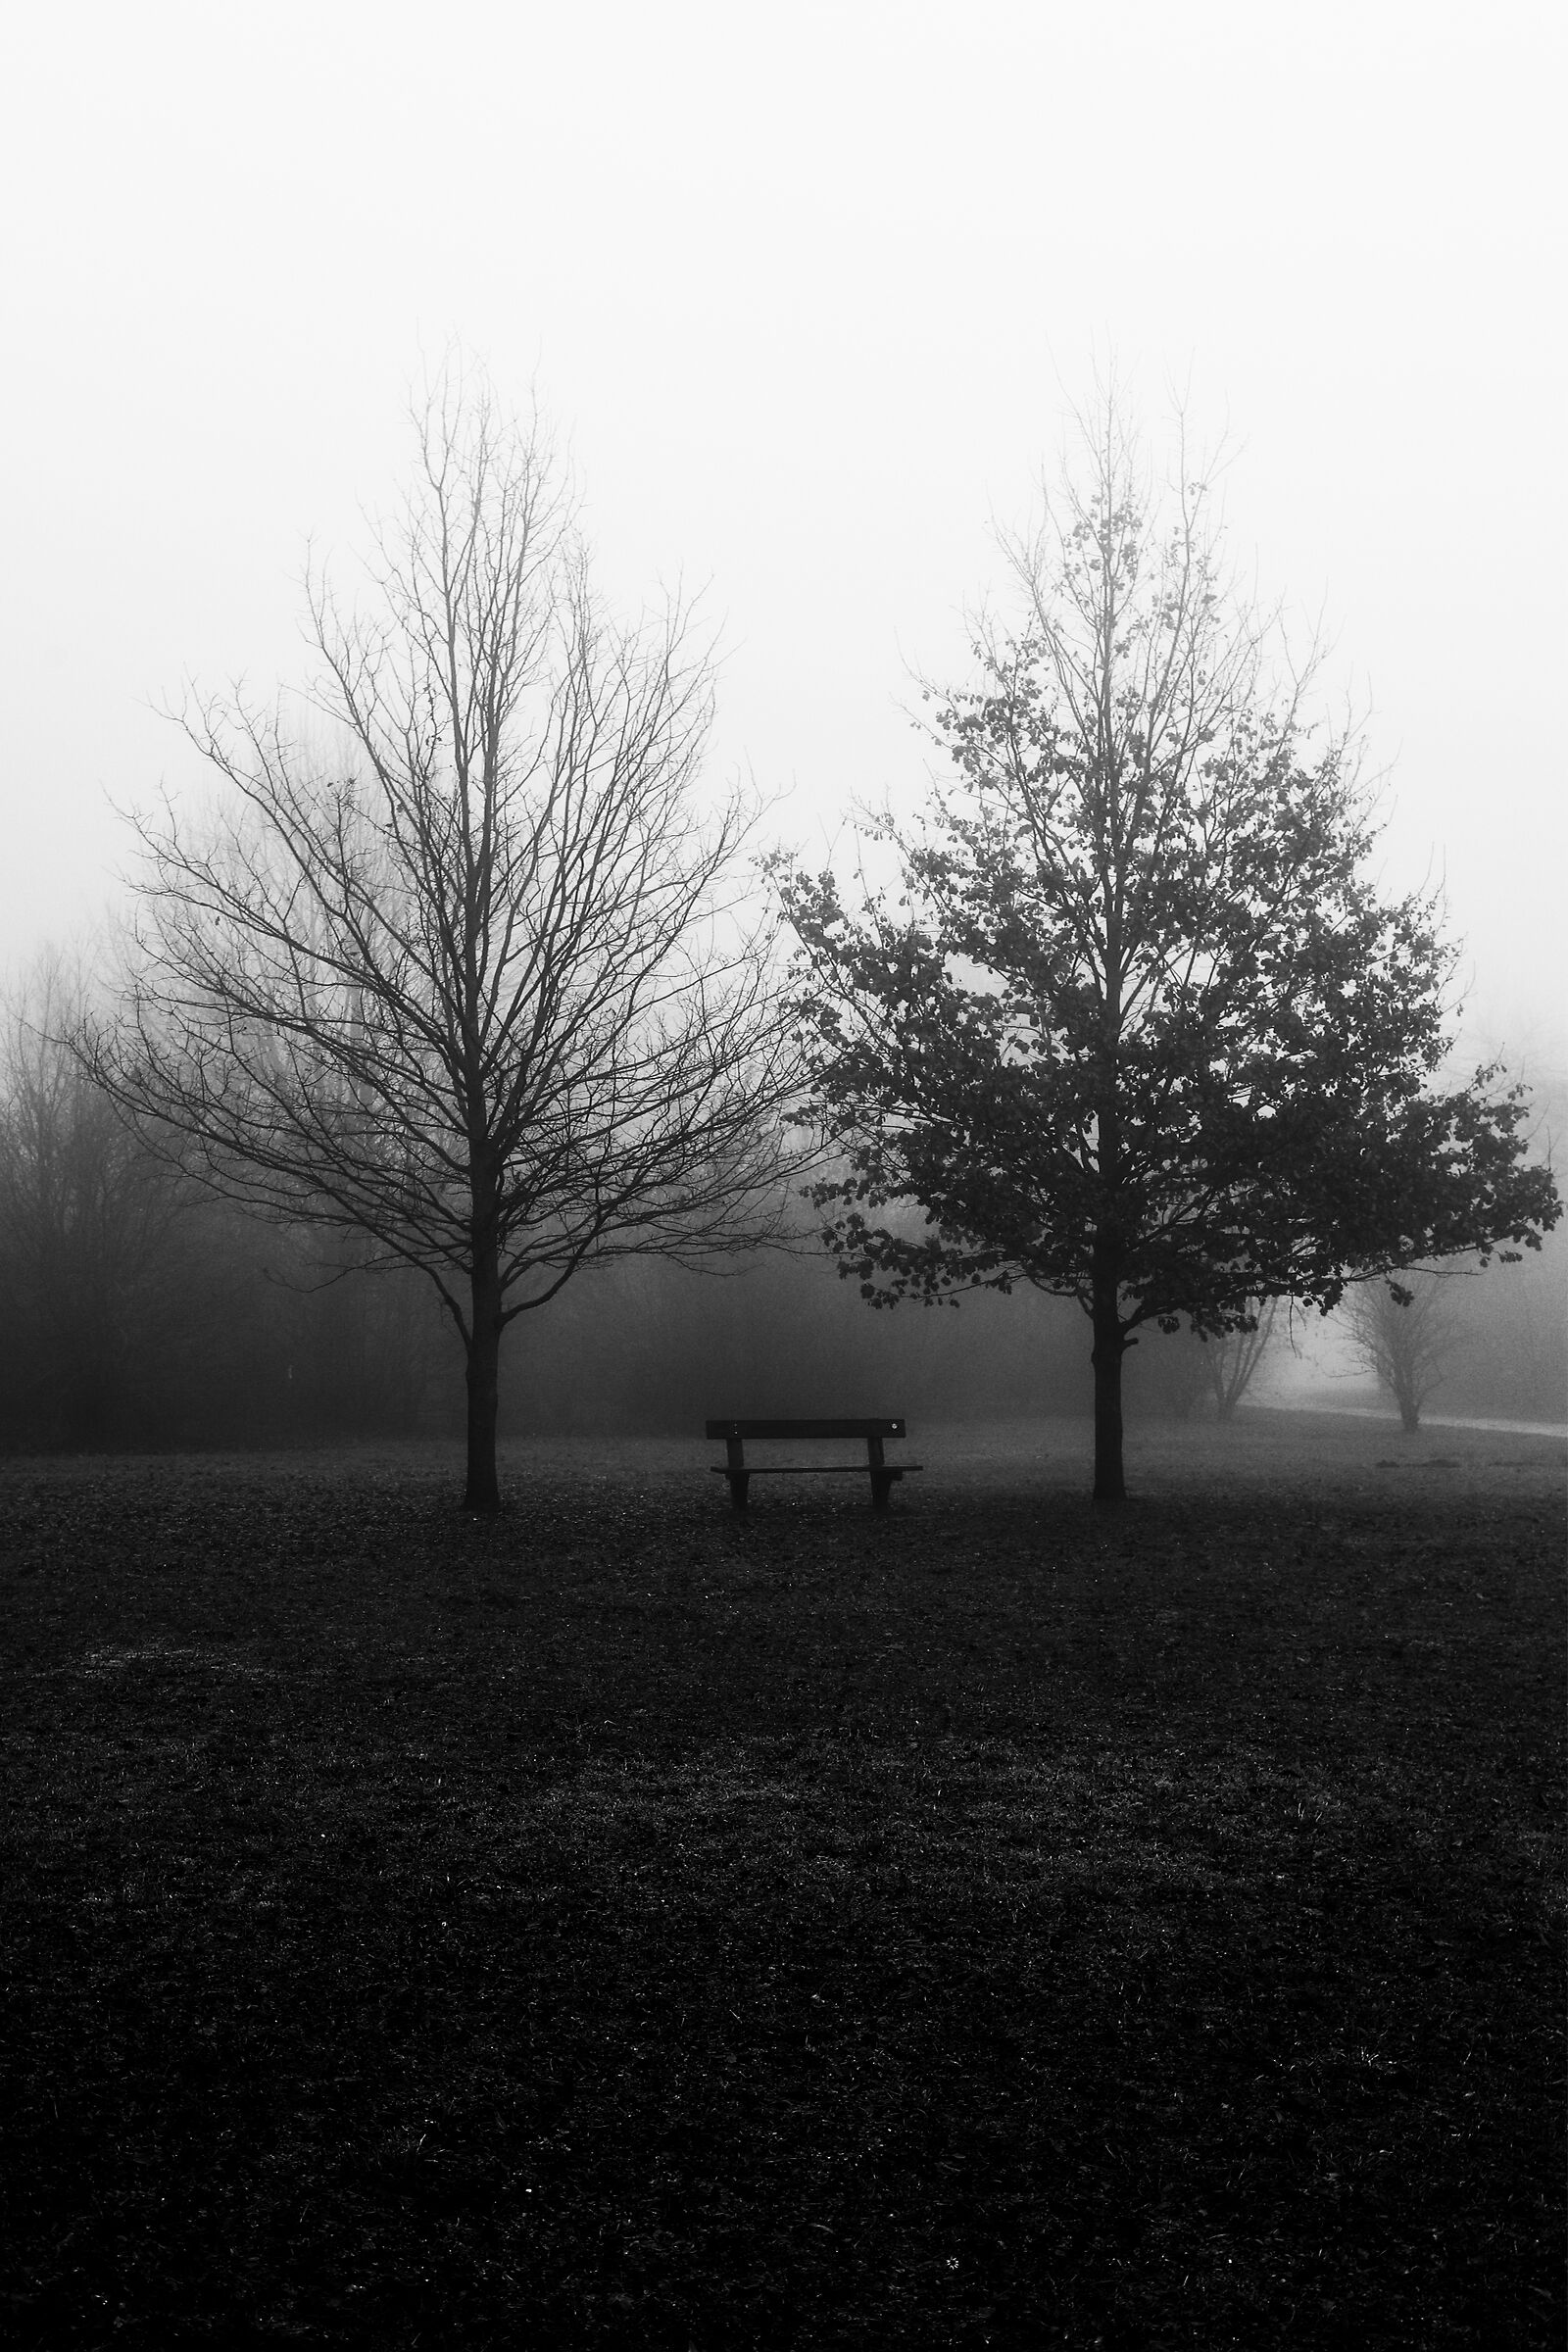 The silences of the park...